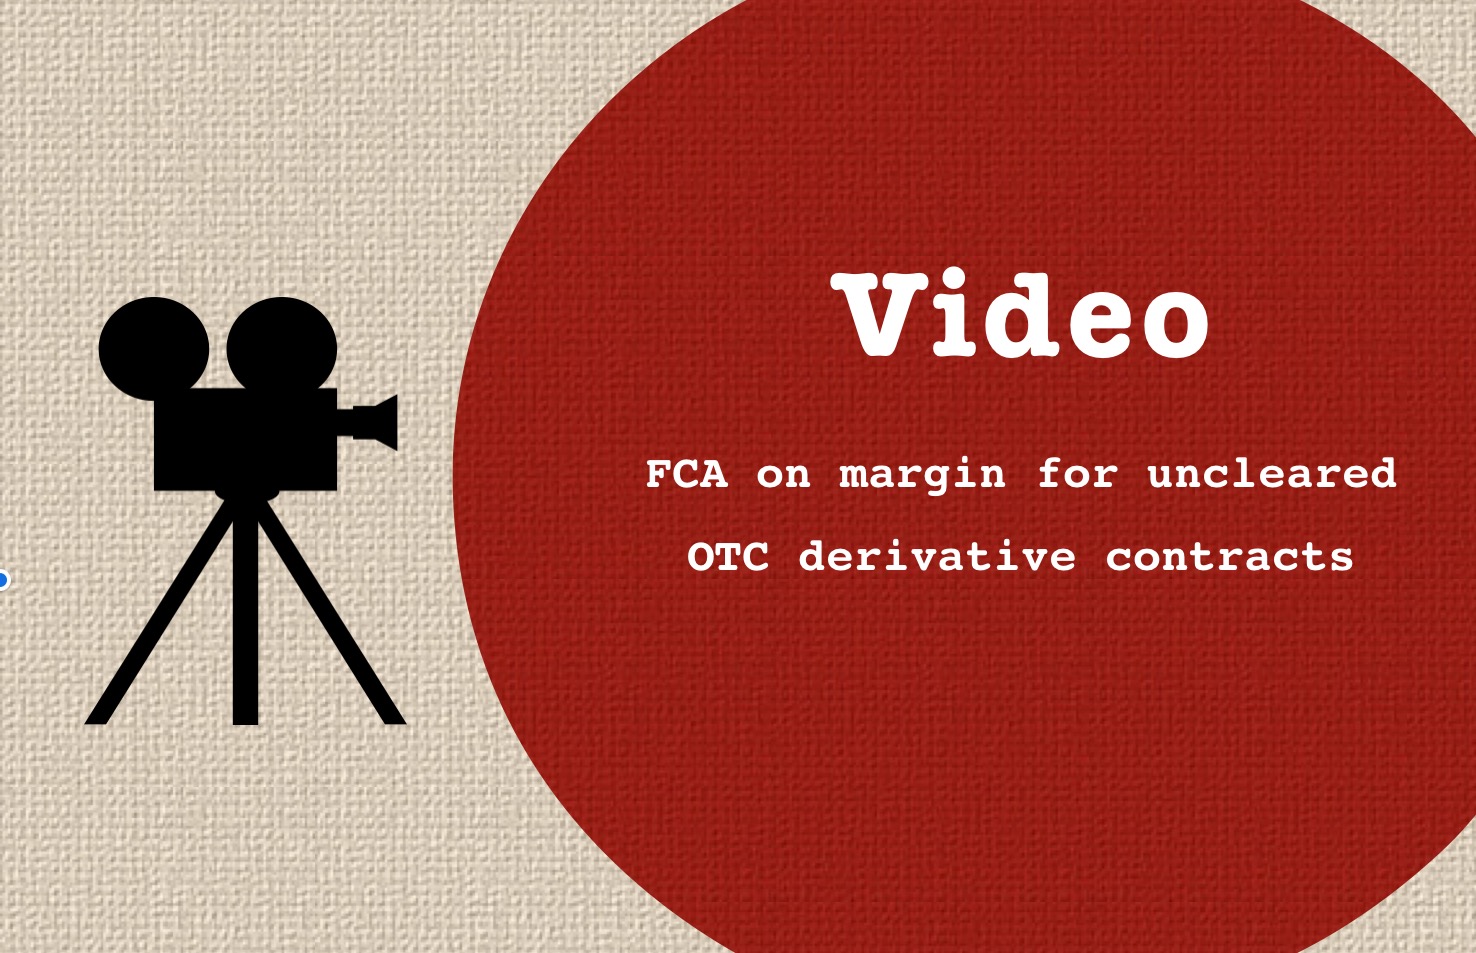 fca video Margin uncleared OTC derivative contracts